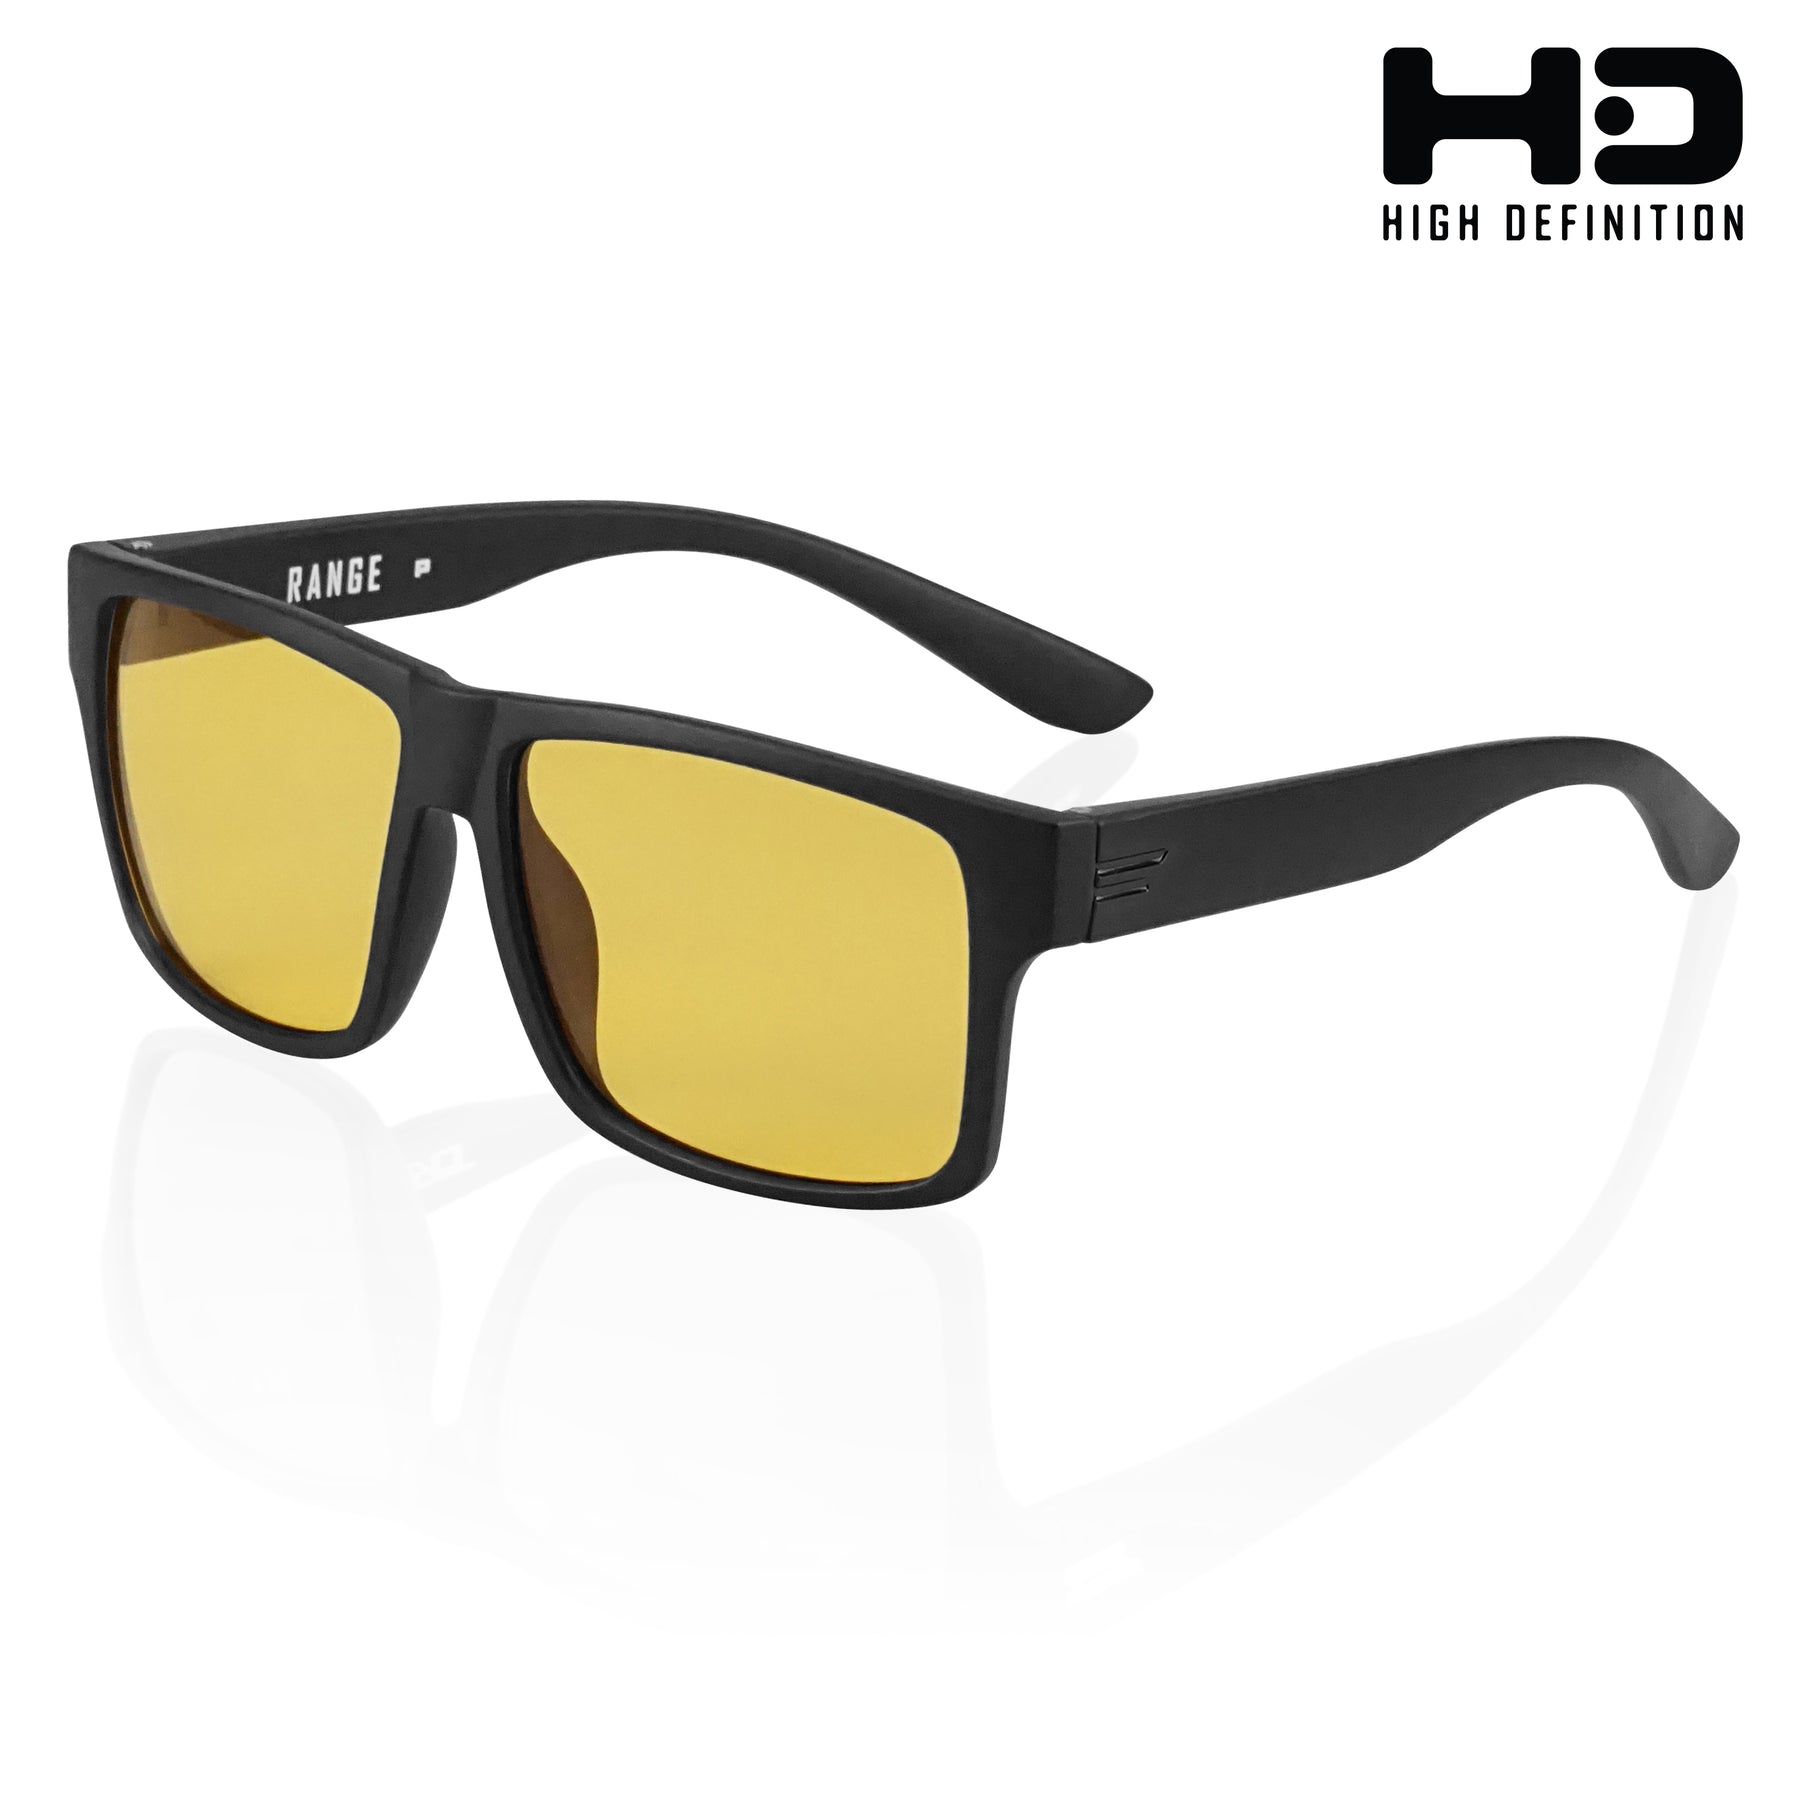 High Definition sunglasses NIGHT DRIVING Low light RANGE HD